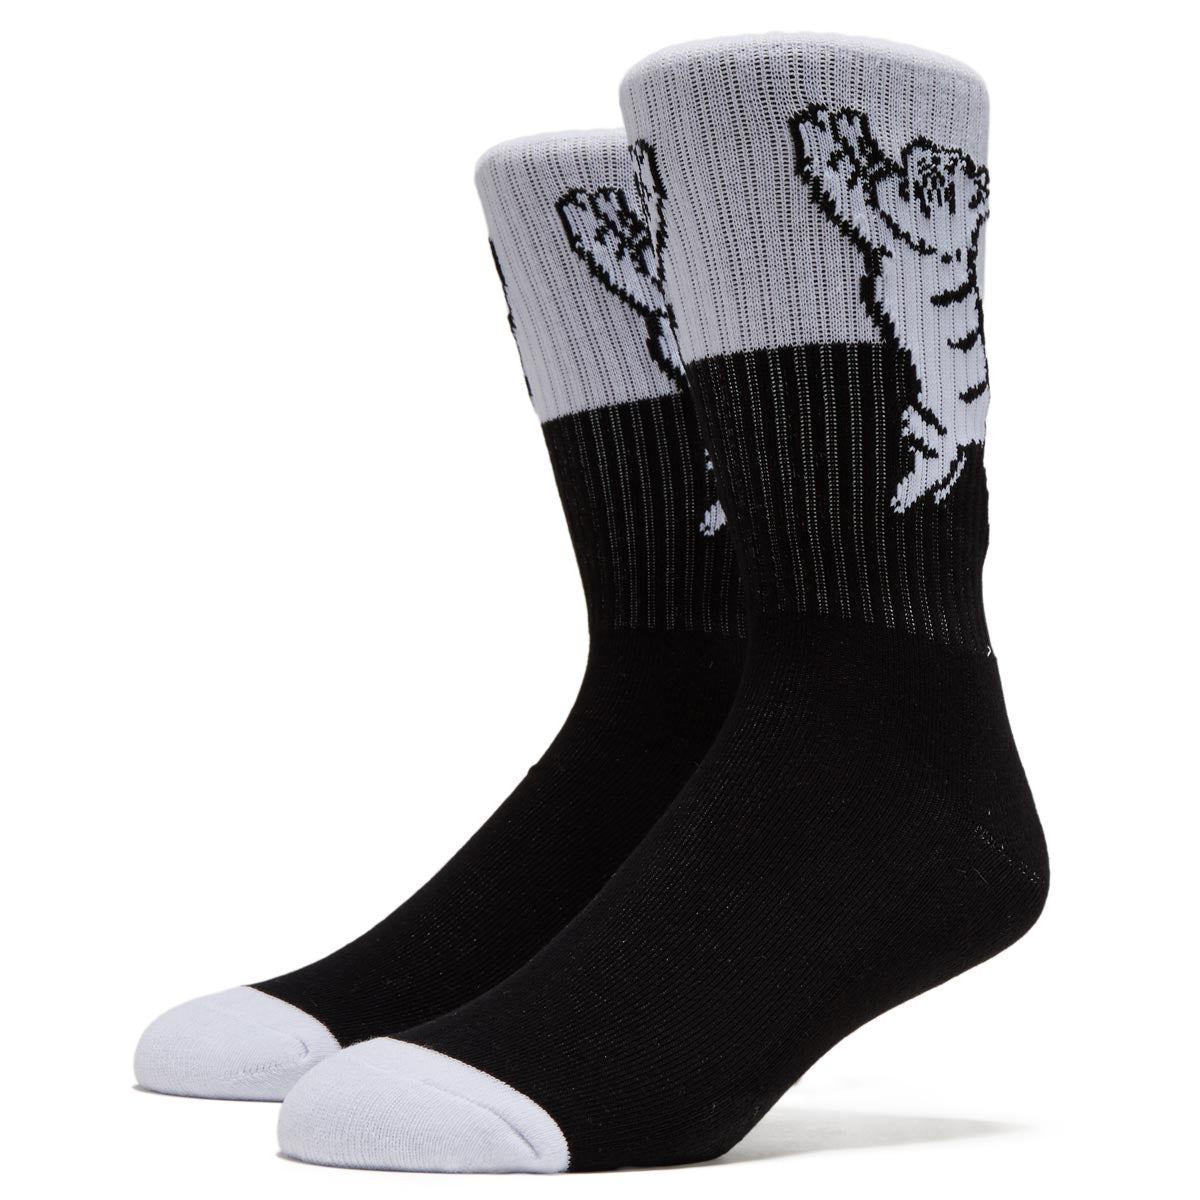 Theories Conscious Kitty 2 Tone Socks - Black/White image 1